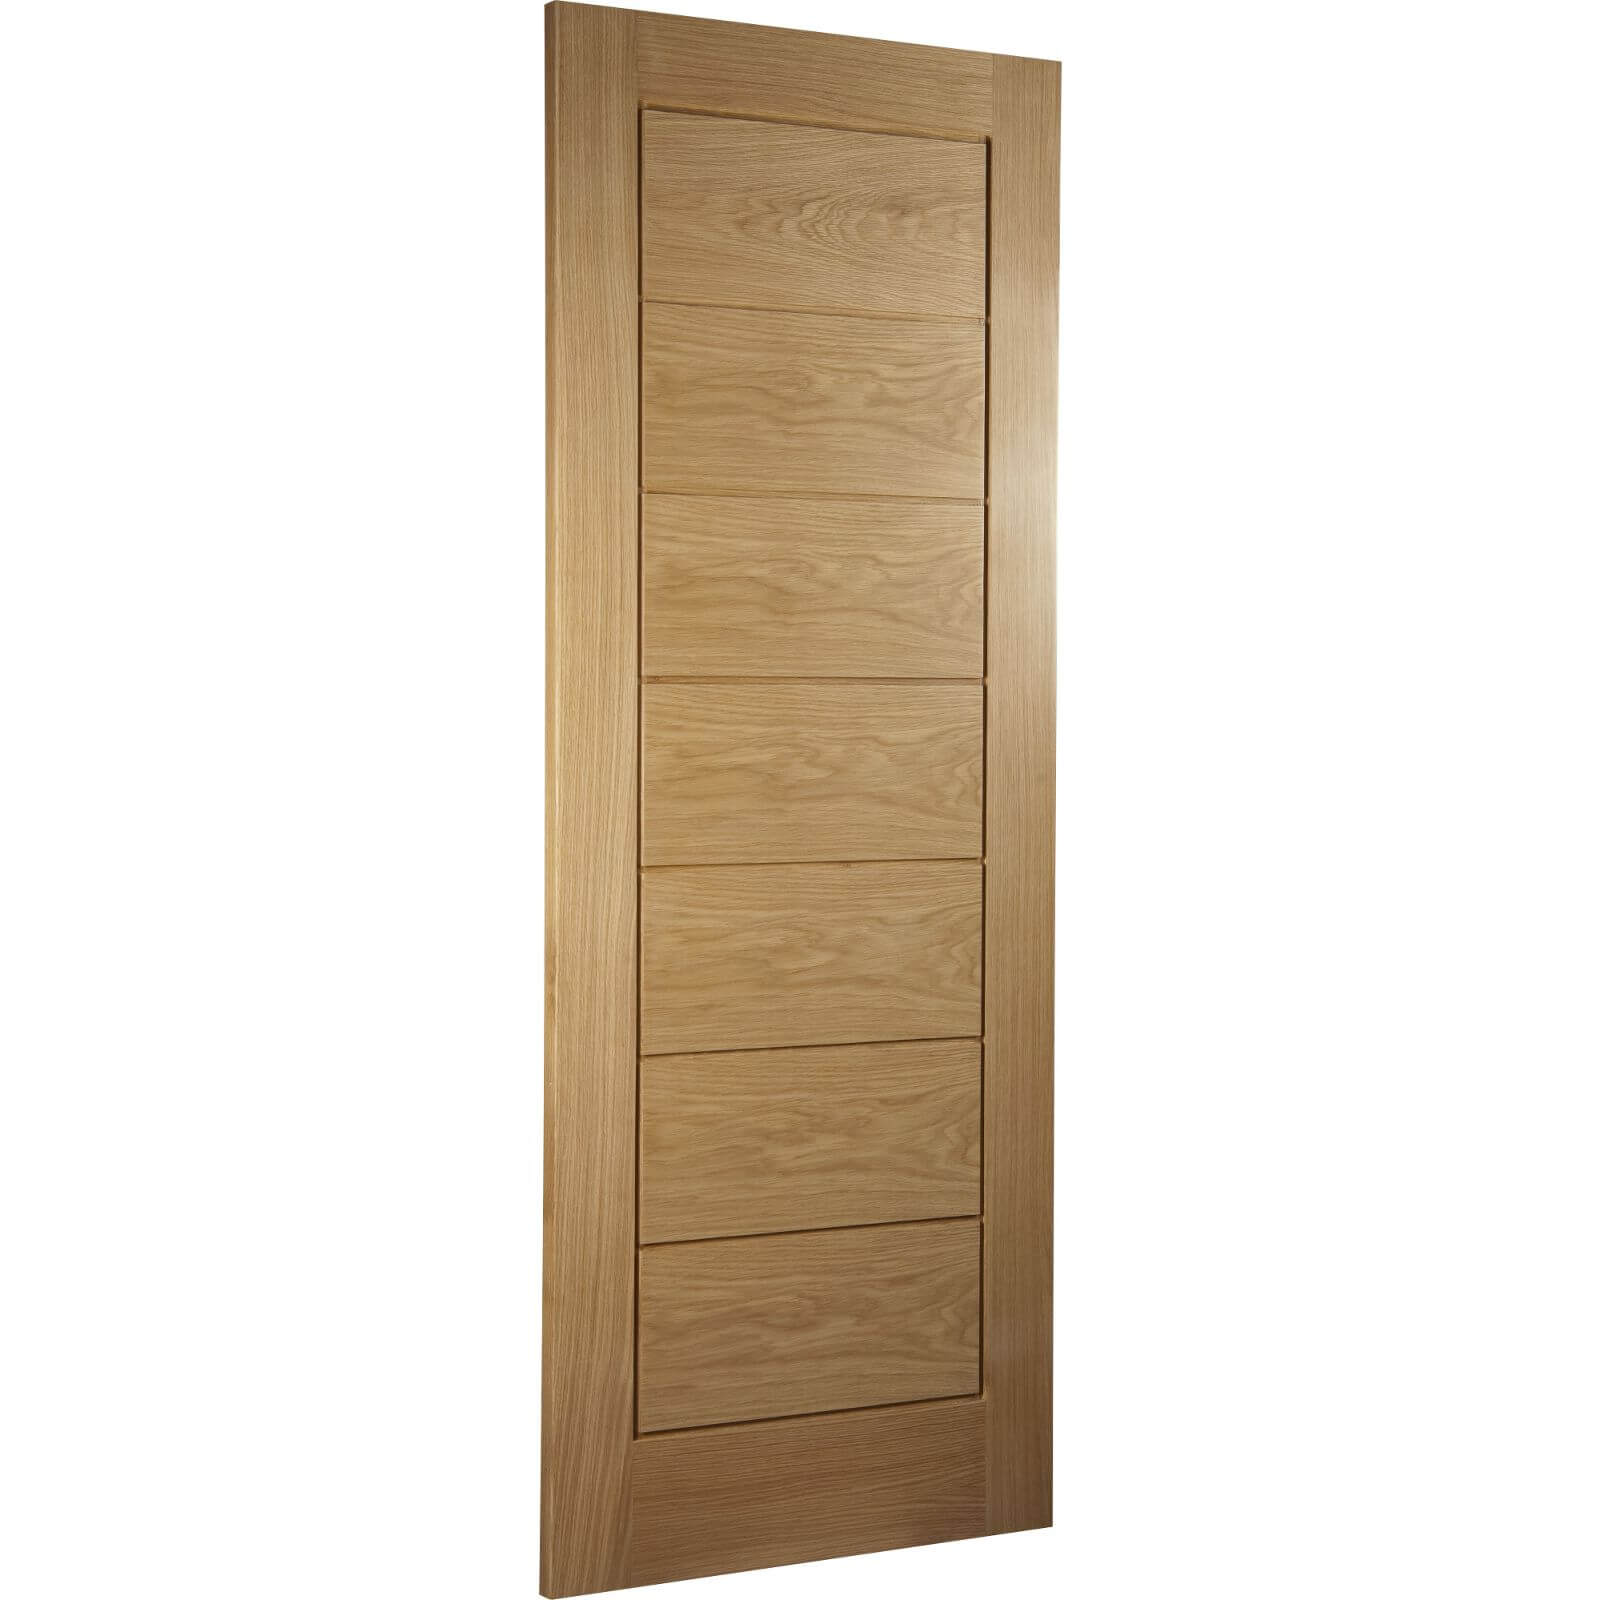 Horizontal 7 Panel White Oak Veneer Internal Door - 686mm Wide